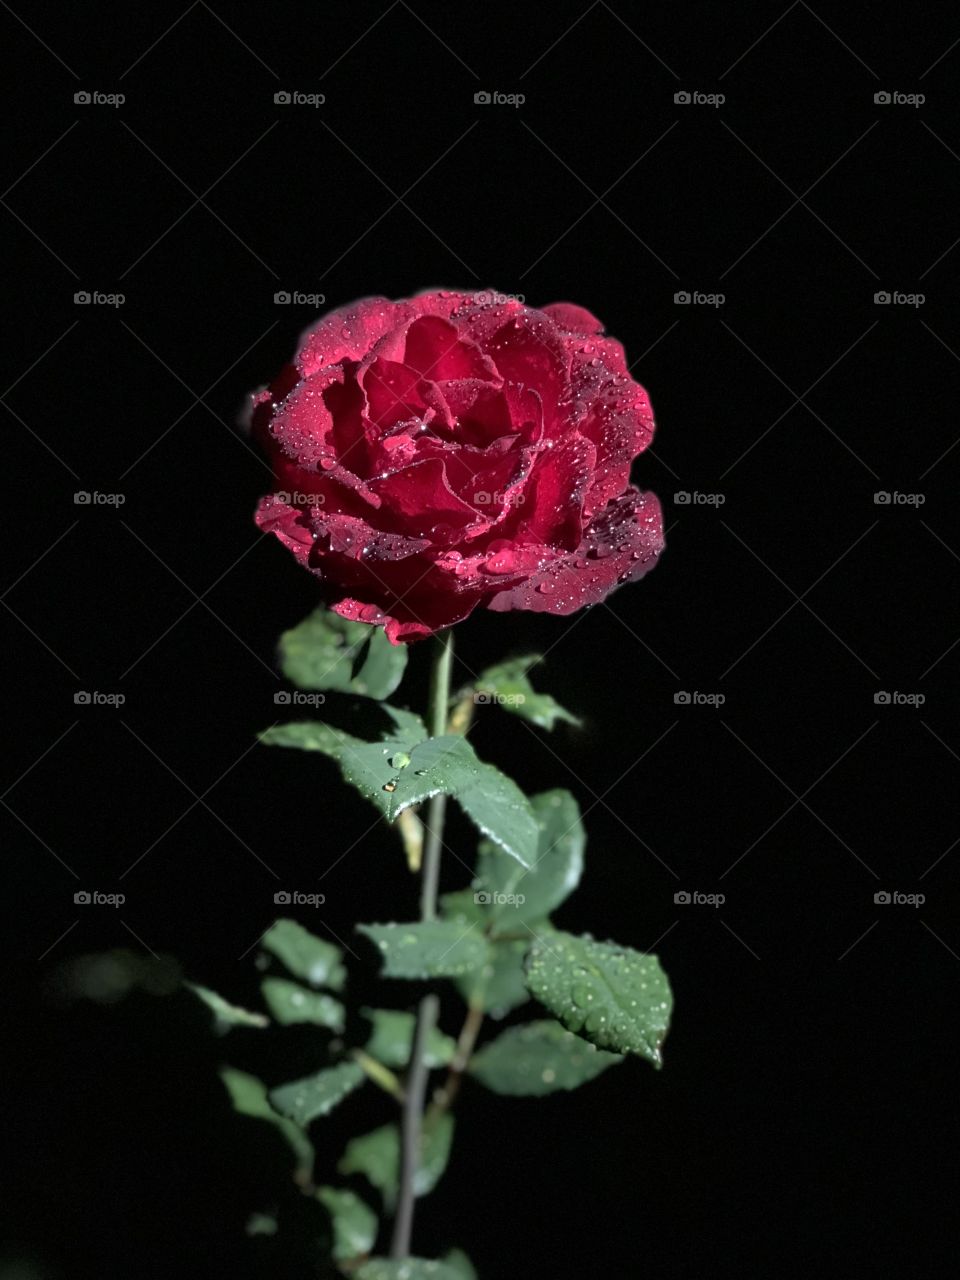 Dripping rose